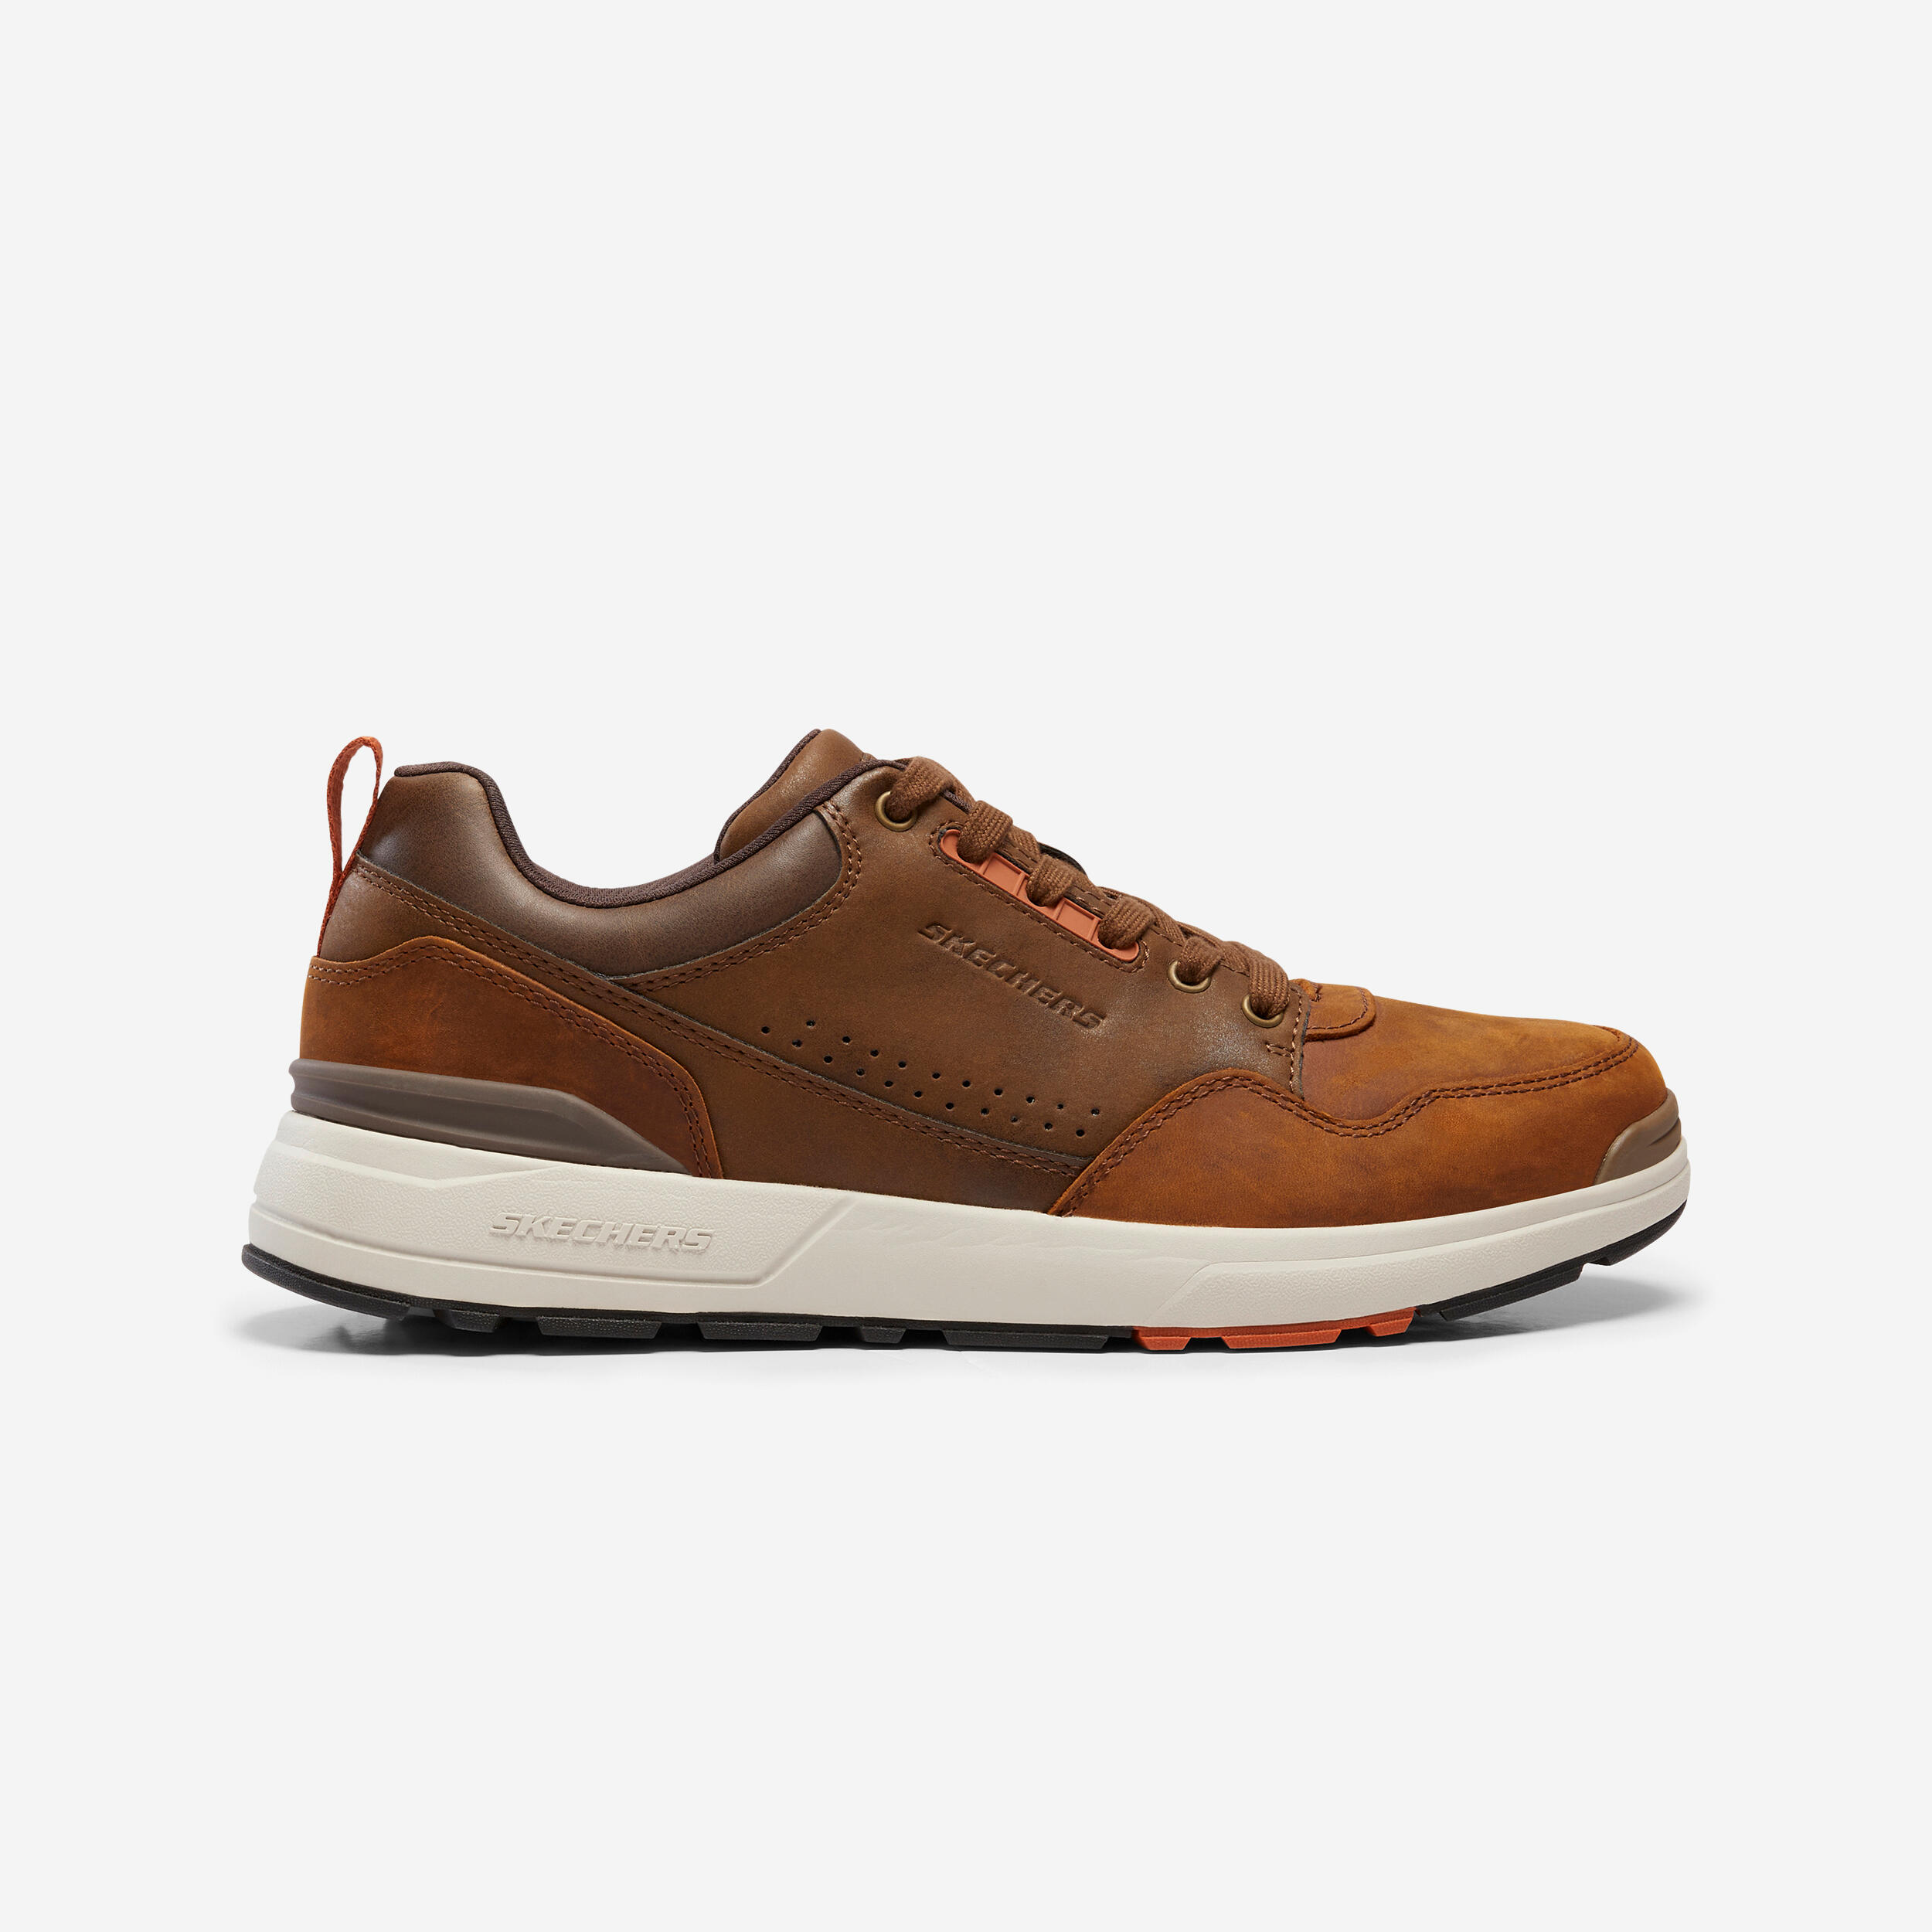 Skechers Men's Urban Walking Shoes Rozier Leather - Brown